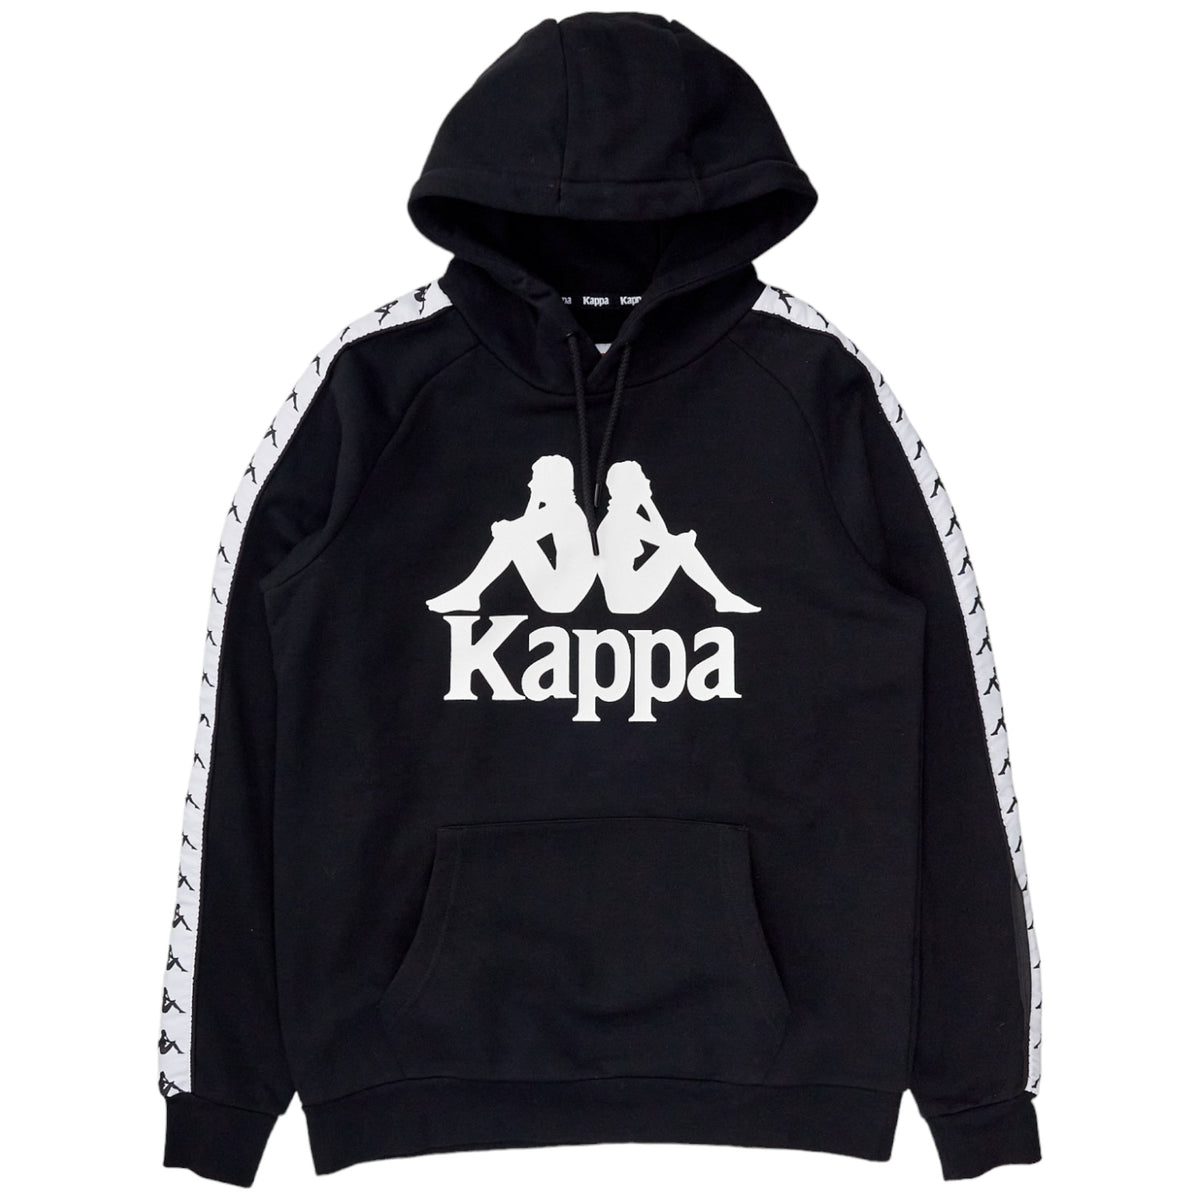 Kappa Black/White Hurtado Hoody